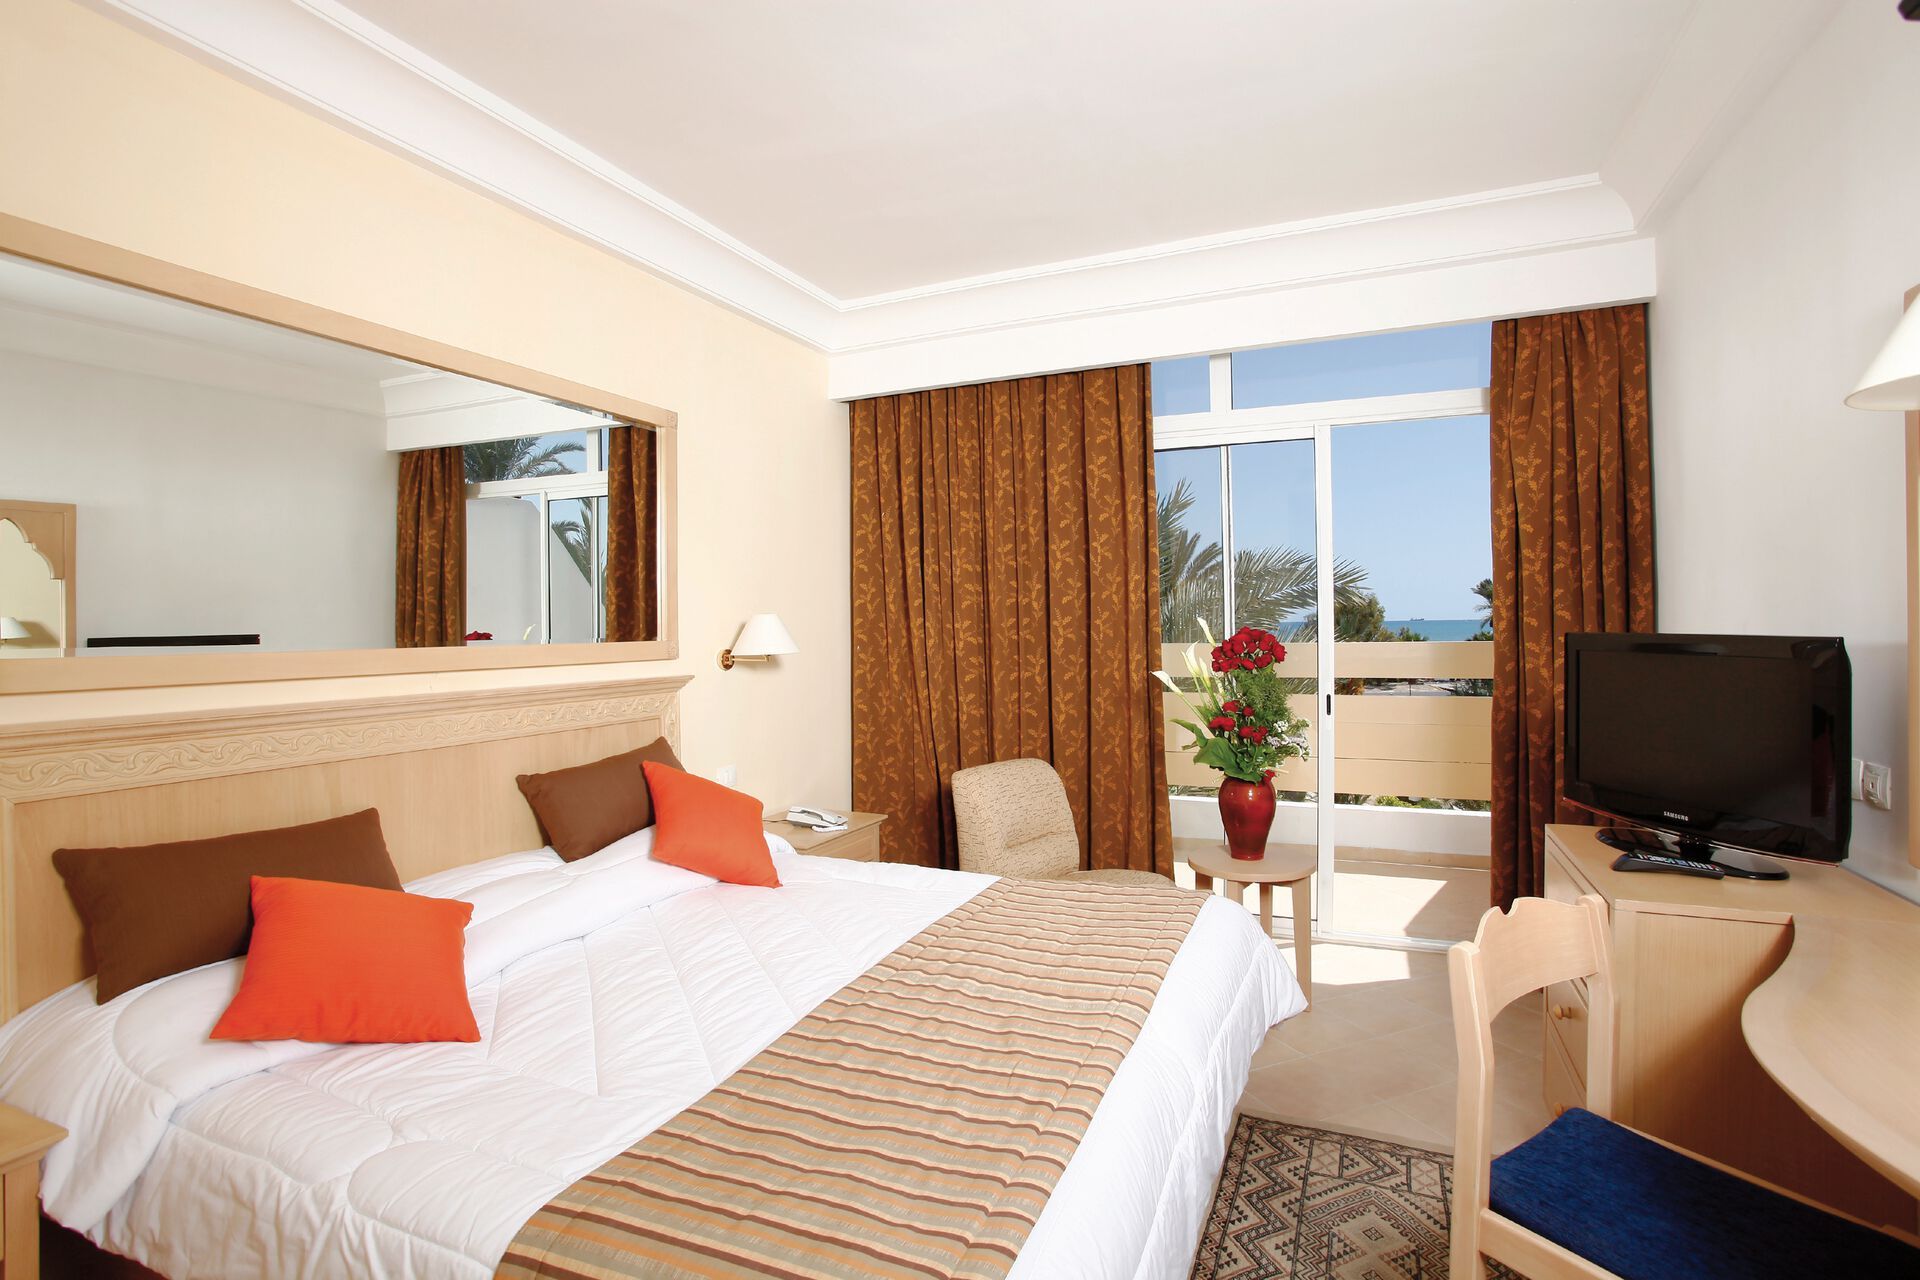 Tunisie - Sousse - Hotel Marhaba Salem 4*